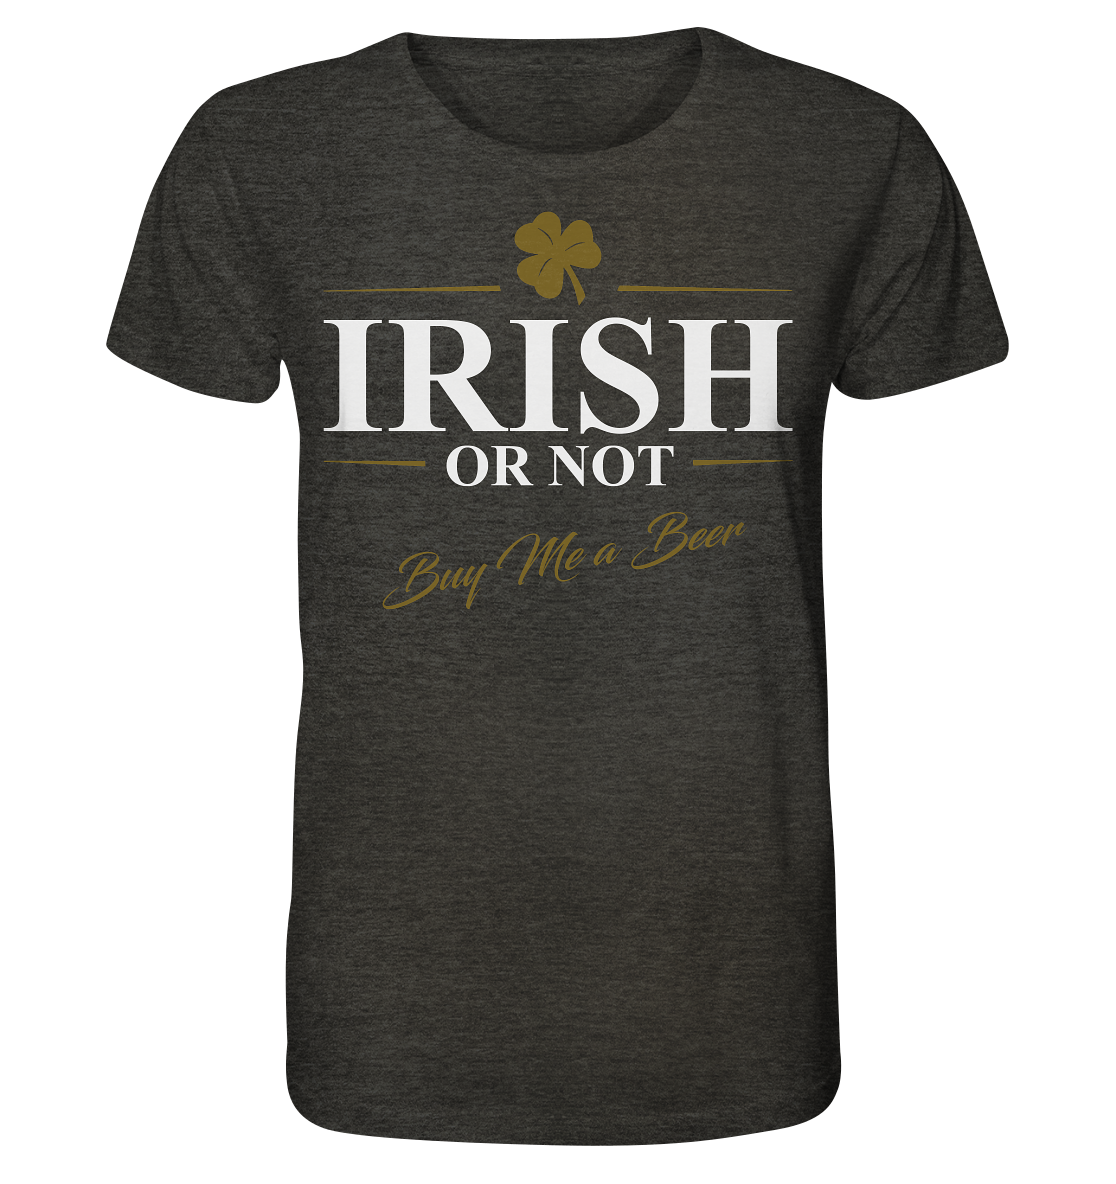 Irish Or Not "Buy Me A Beer" - Organic Shirt (meliert)